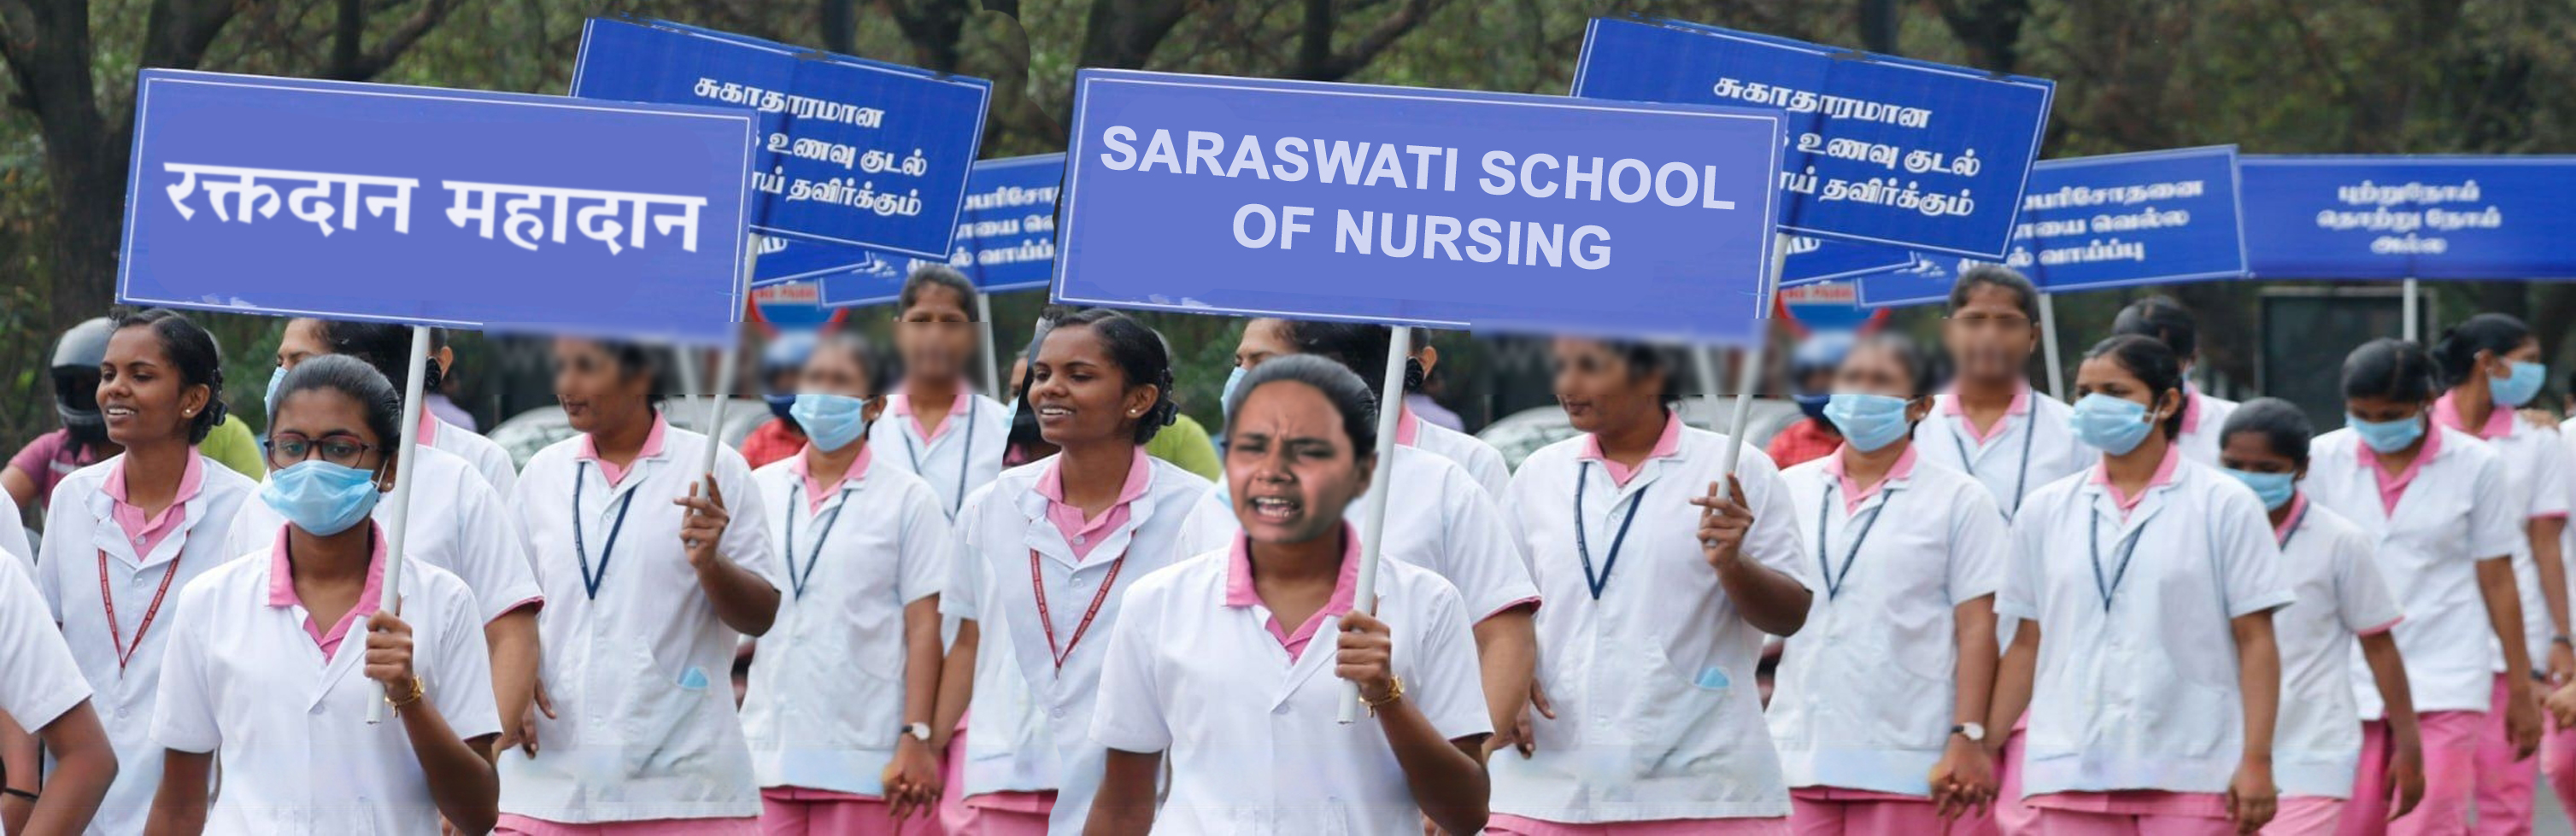 Shrushti nursing college Bidar Karnataka